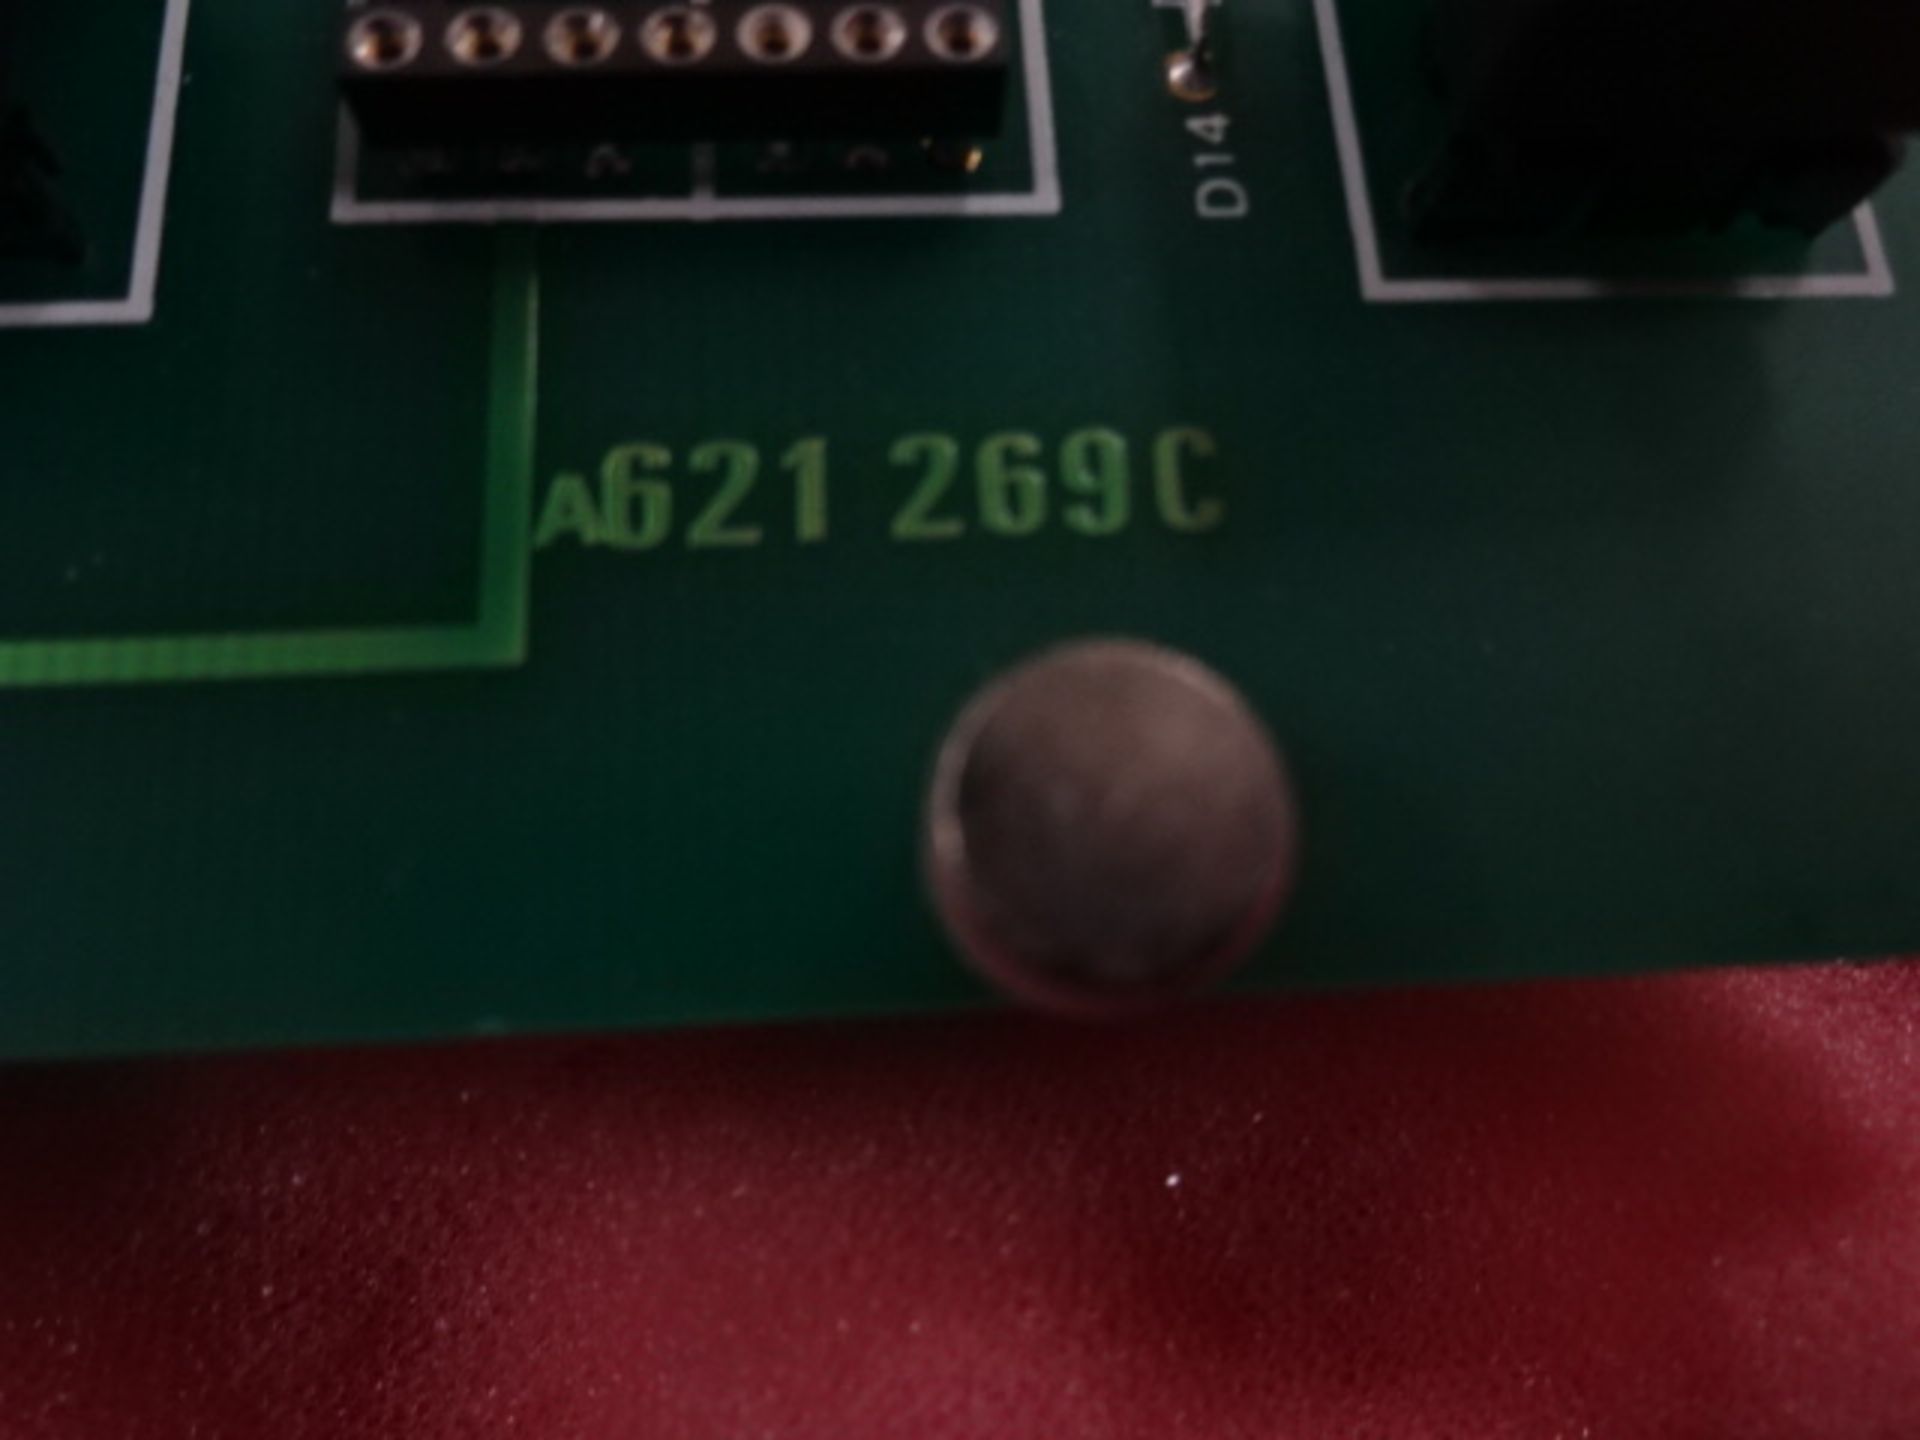 Circuit Imprimé - Electronic Board - Image 2 of 5